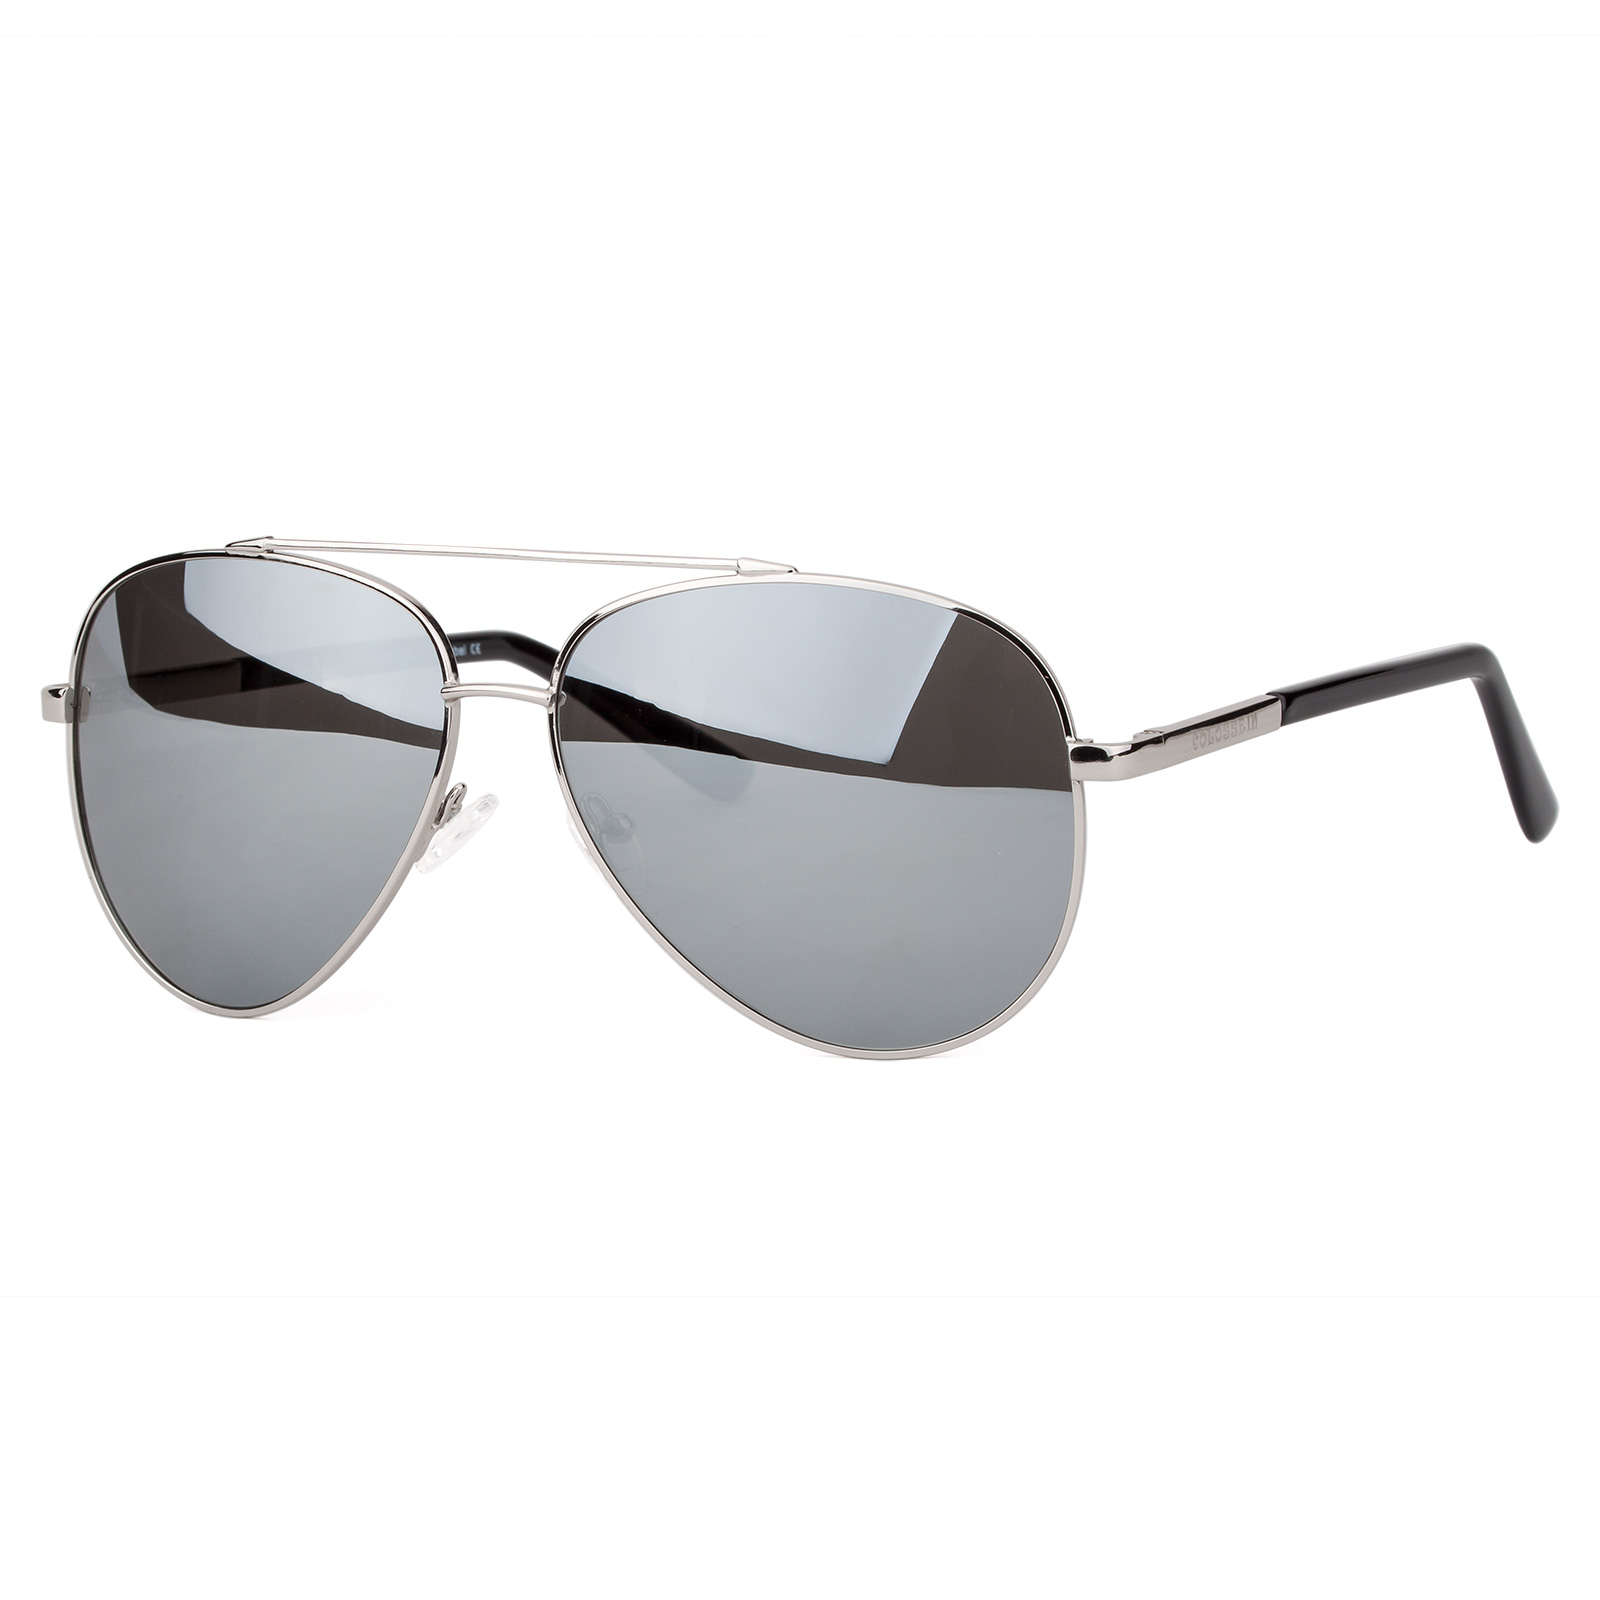 Aviator Sunglasses for Men Women UV400 Protection Retro Metal Frame